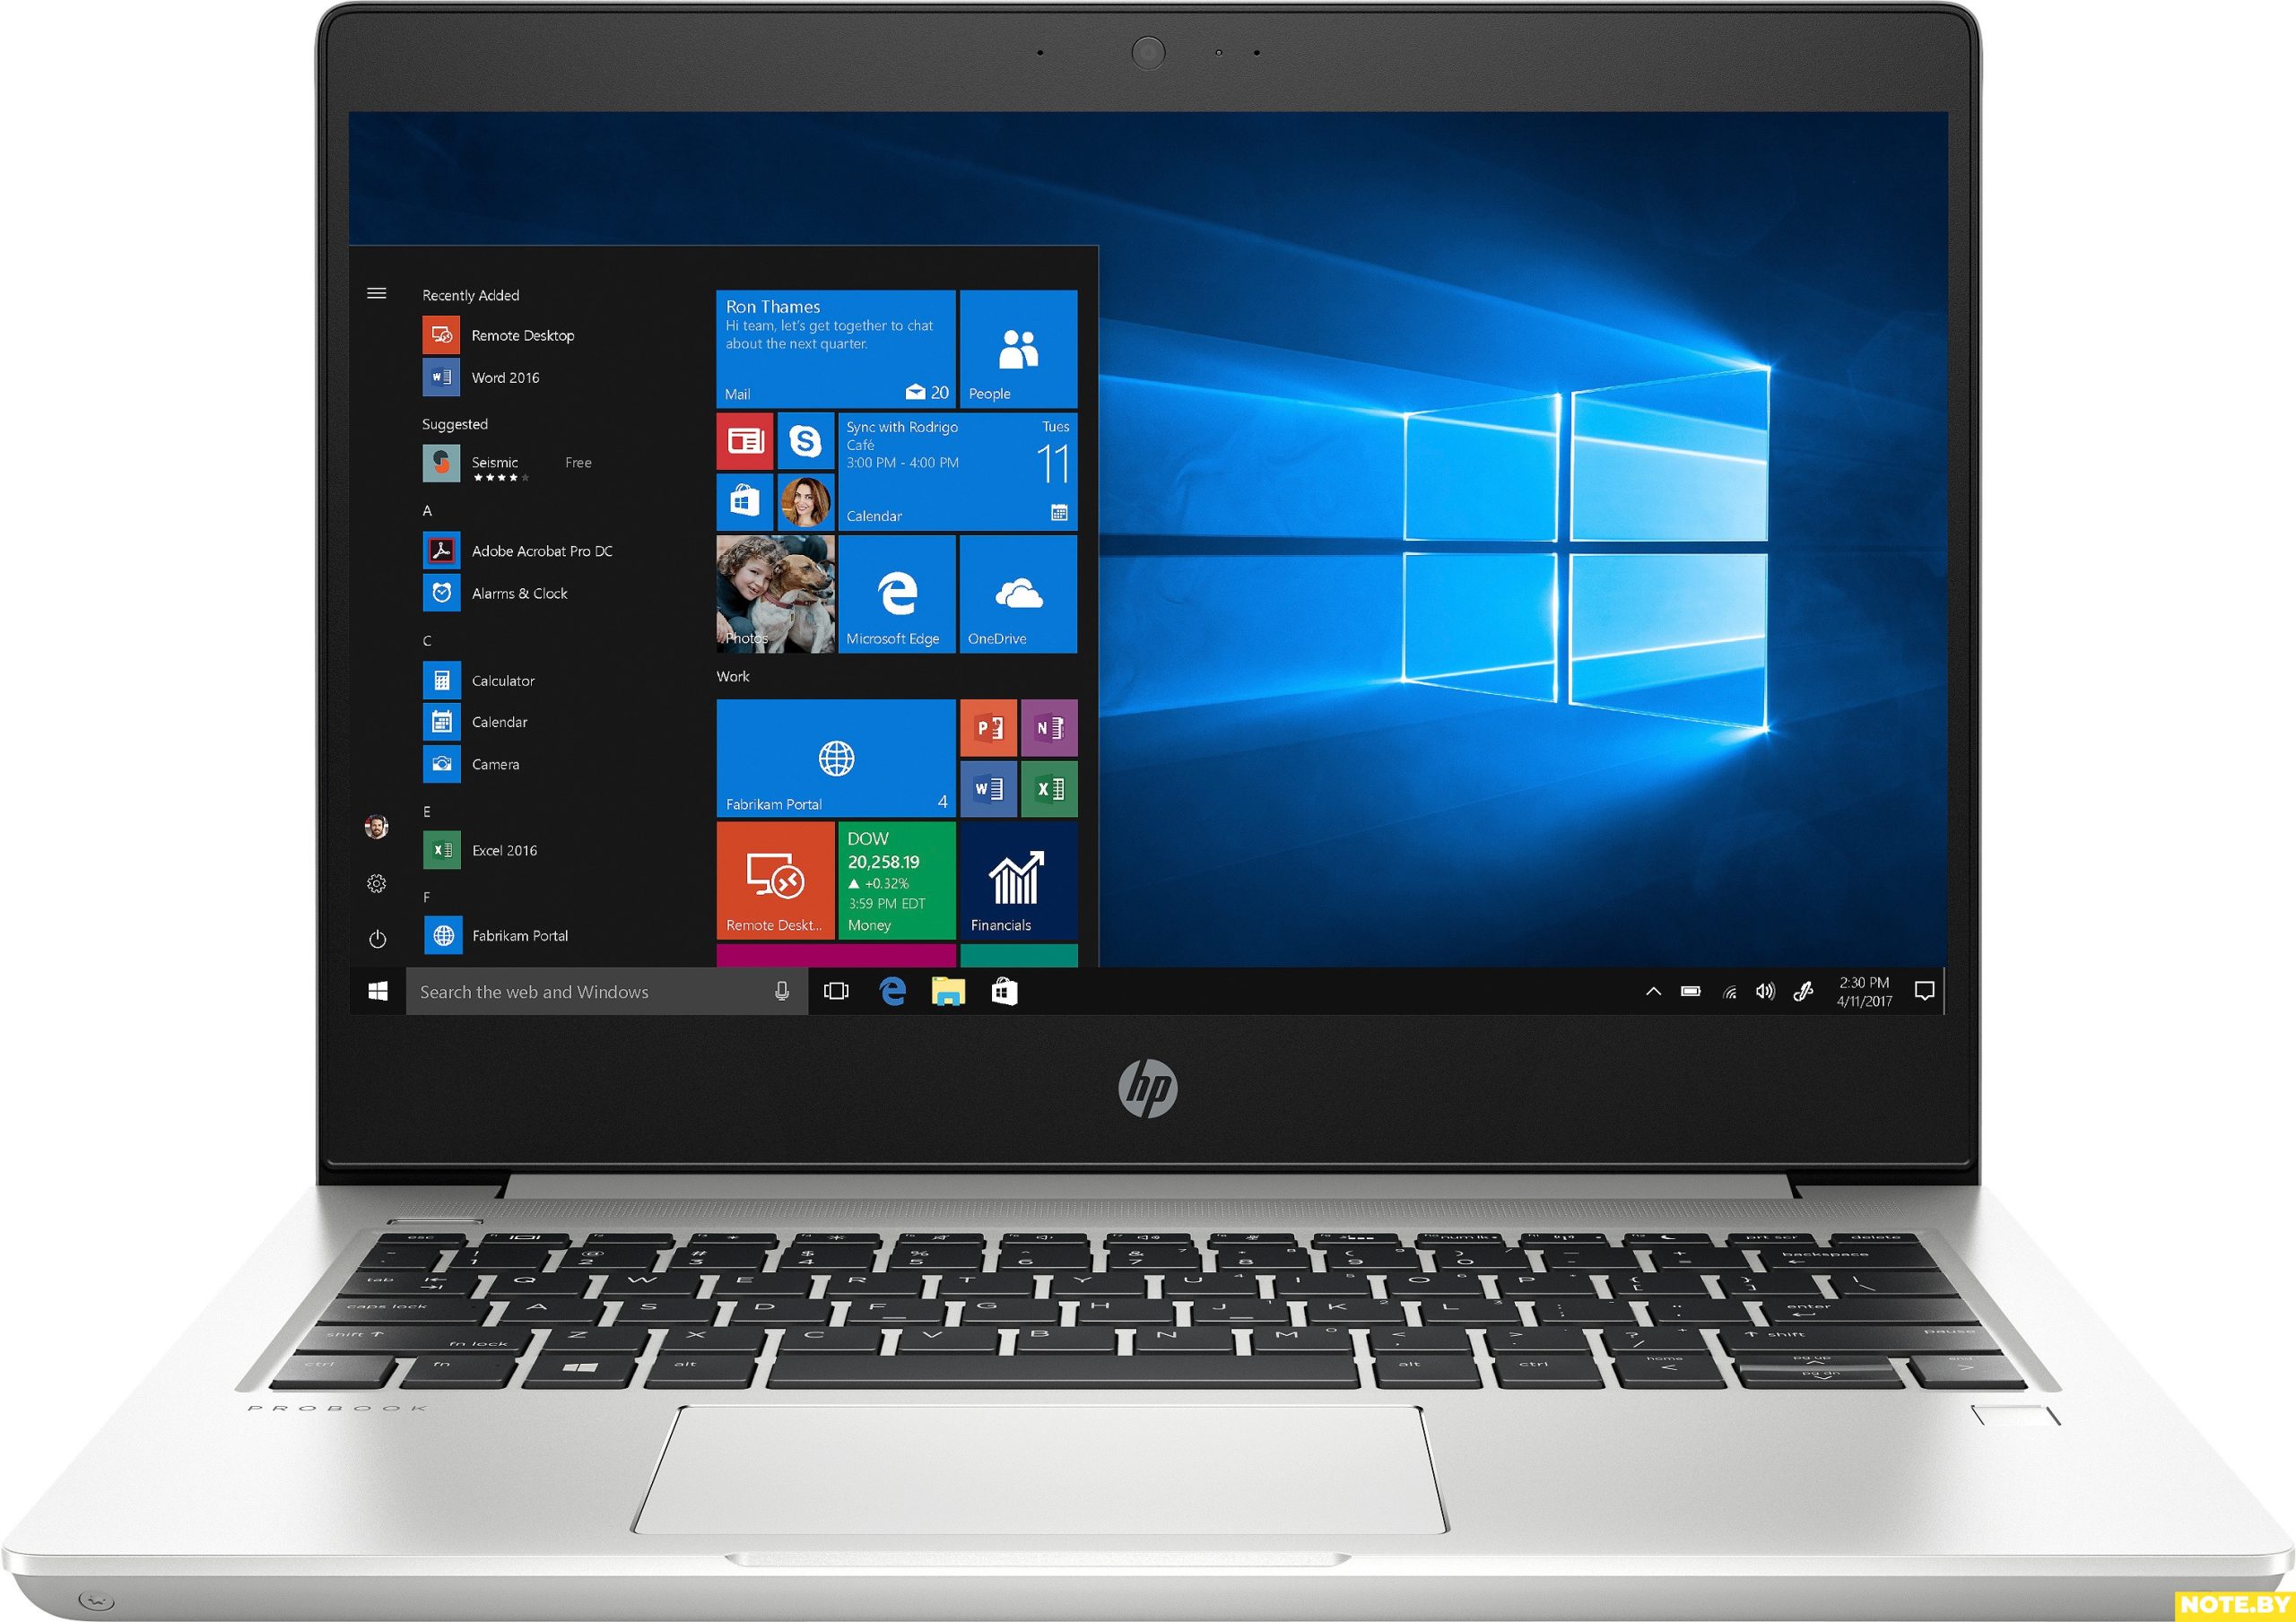 Ноутбук HP ProBook 430 G7 9HR42EA